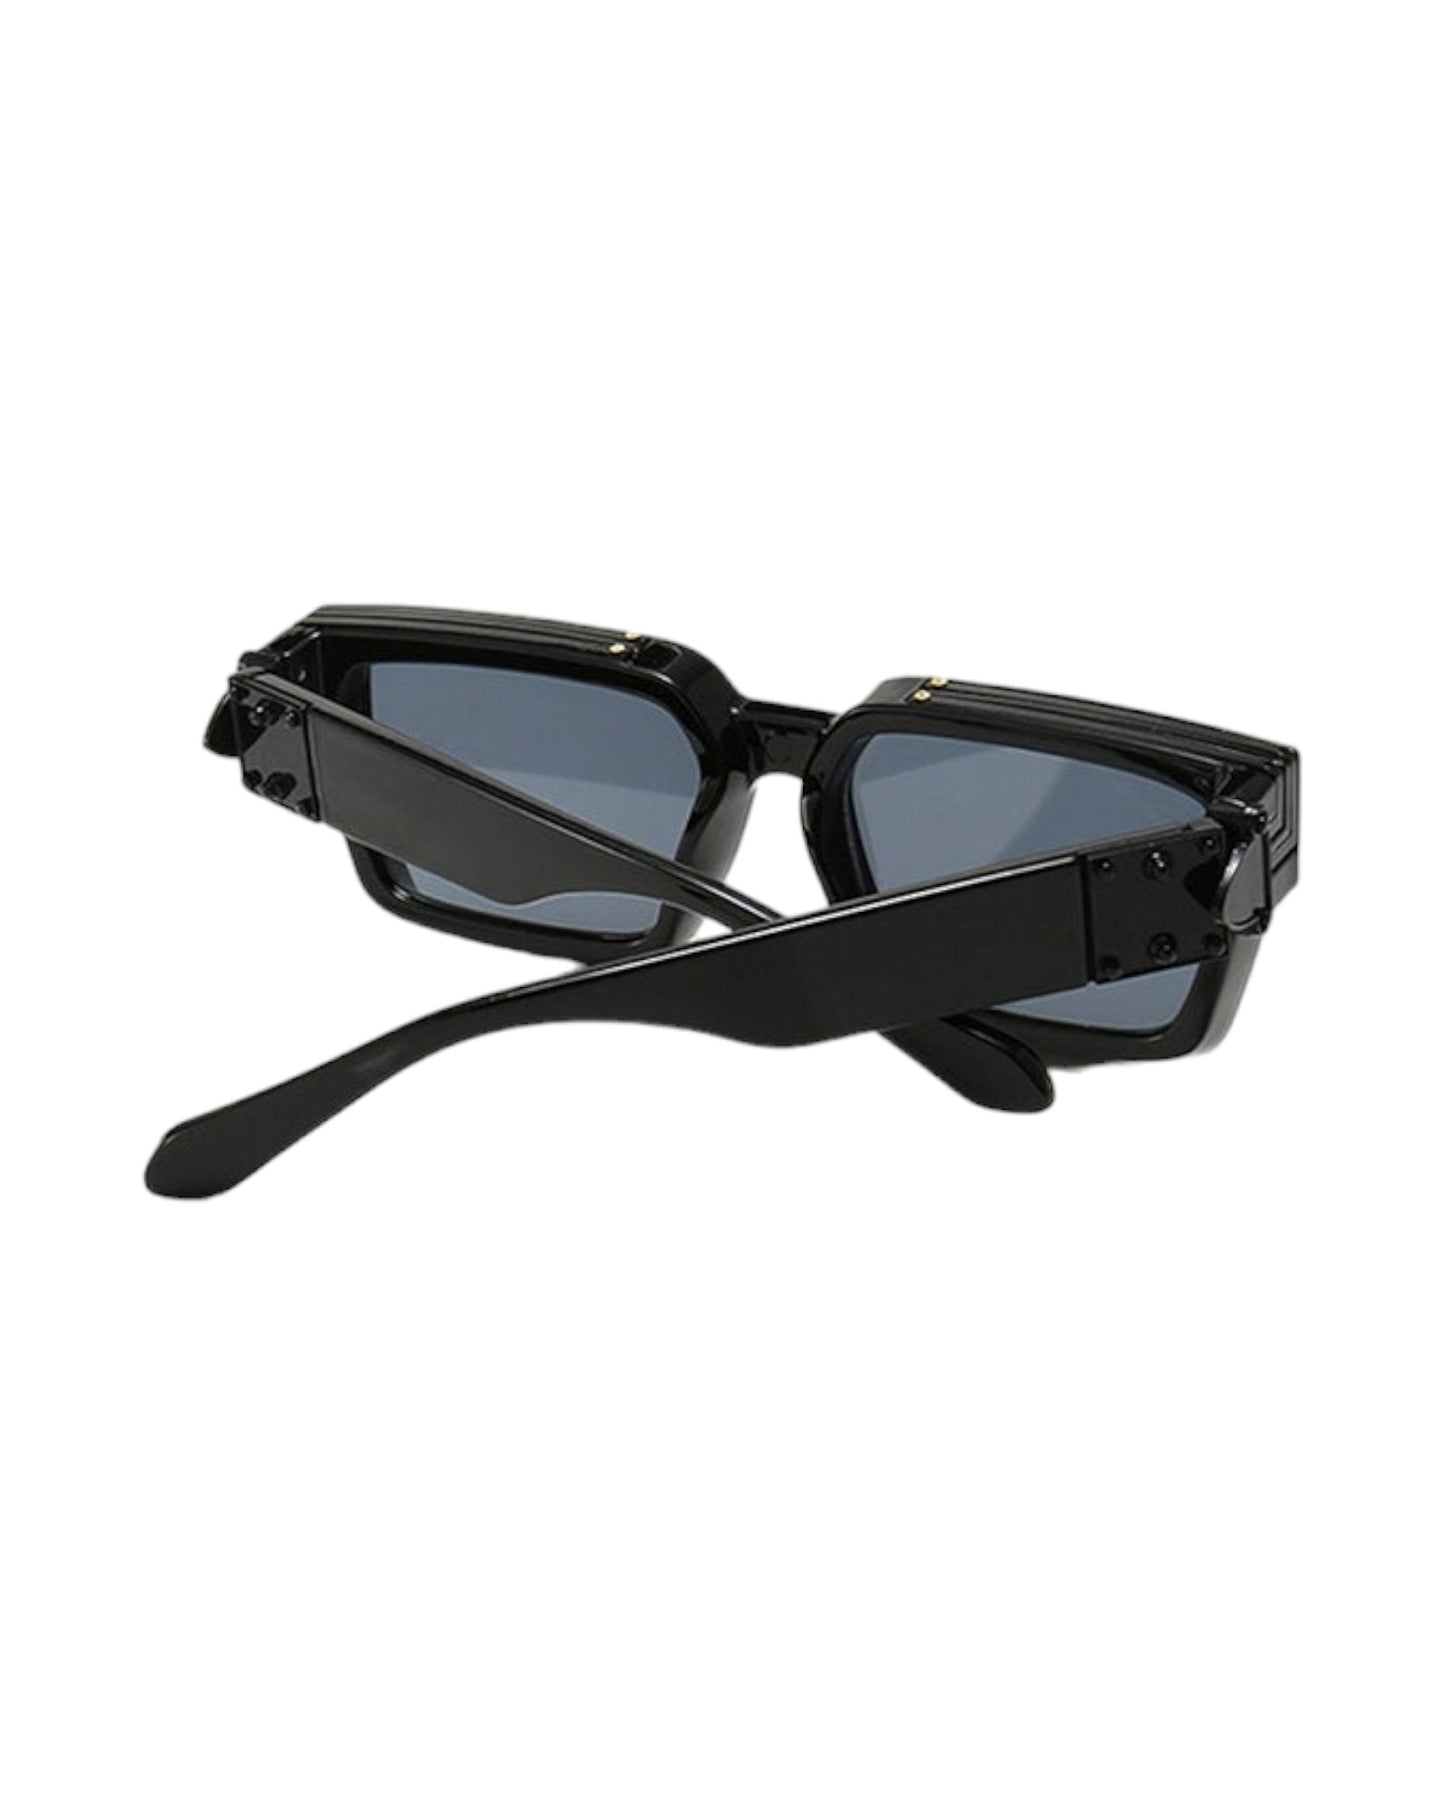 AUSTIN rectangular square sunglasses eyewear shades retro black frame black lens festival fashion